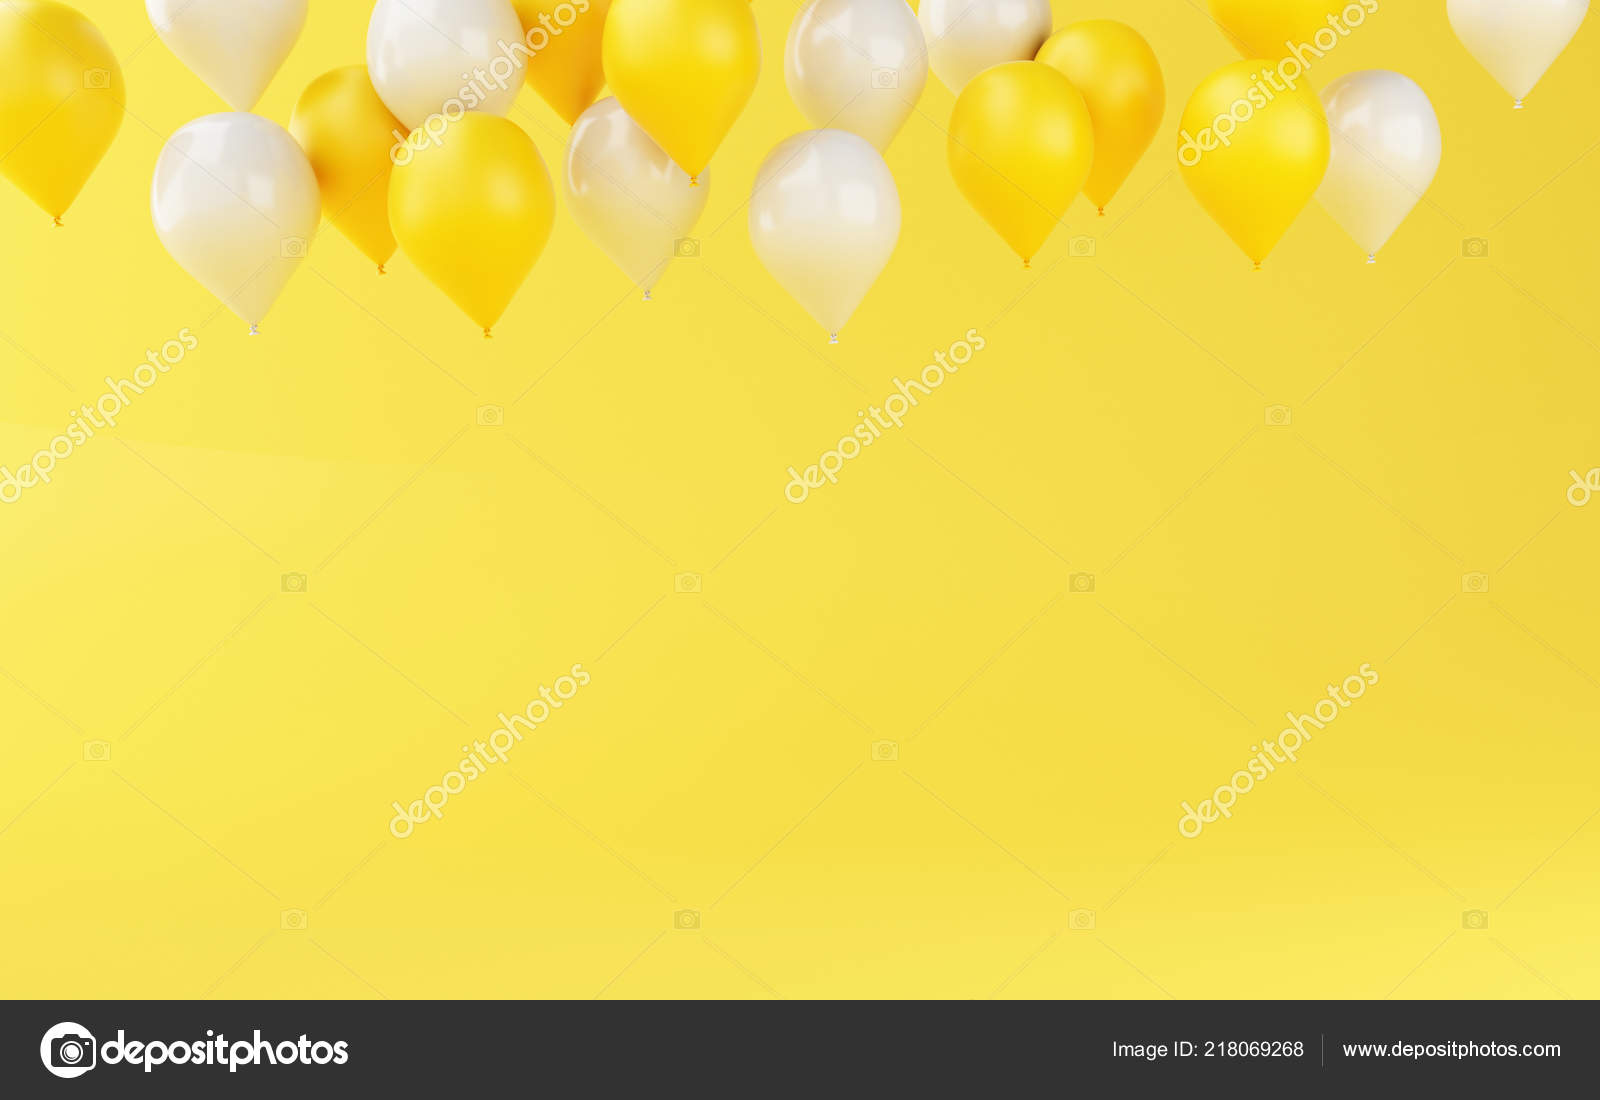 Illustration Balloons Birthday Party Decoration Yellow Background Stock  Photo by ©nicomenijes 218069268